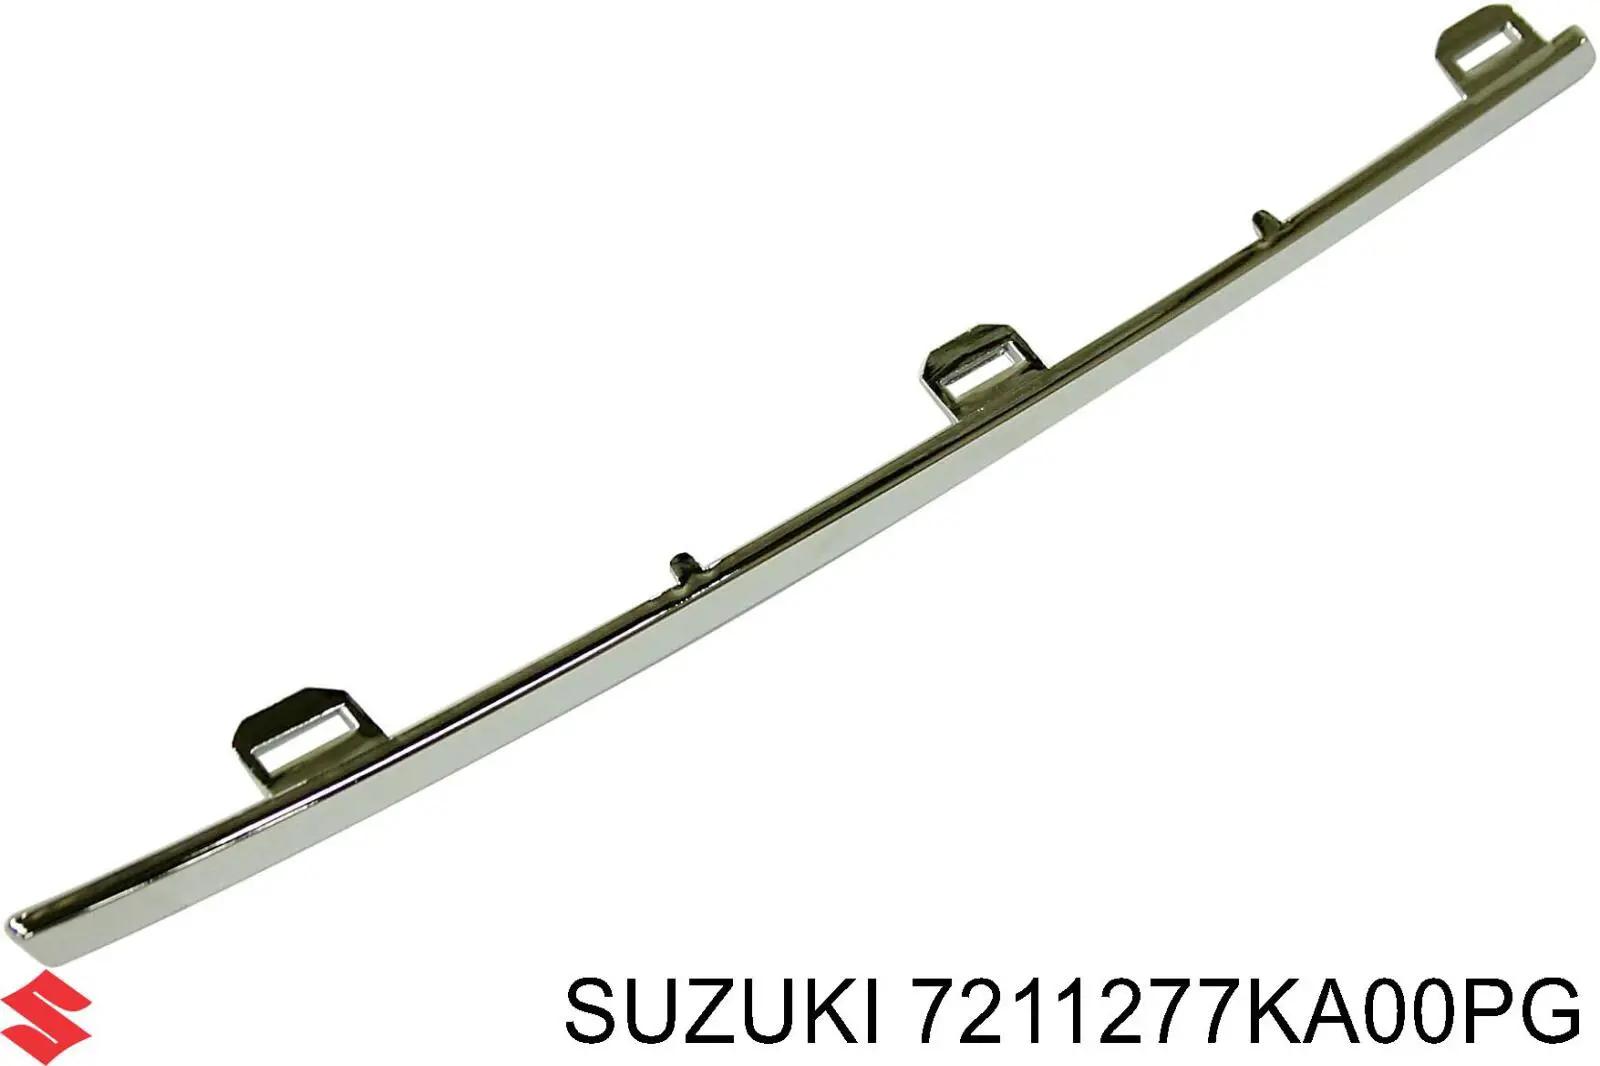 7211277KA00PG Suzuki moldura de grelha do radiador